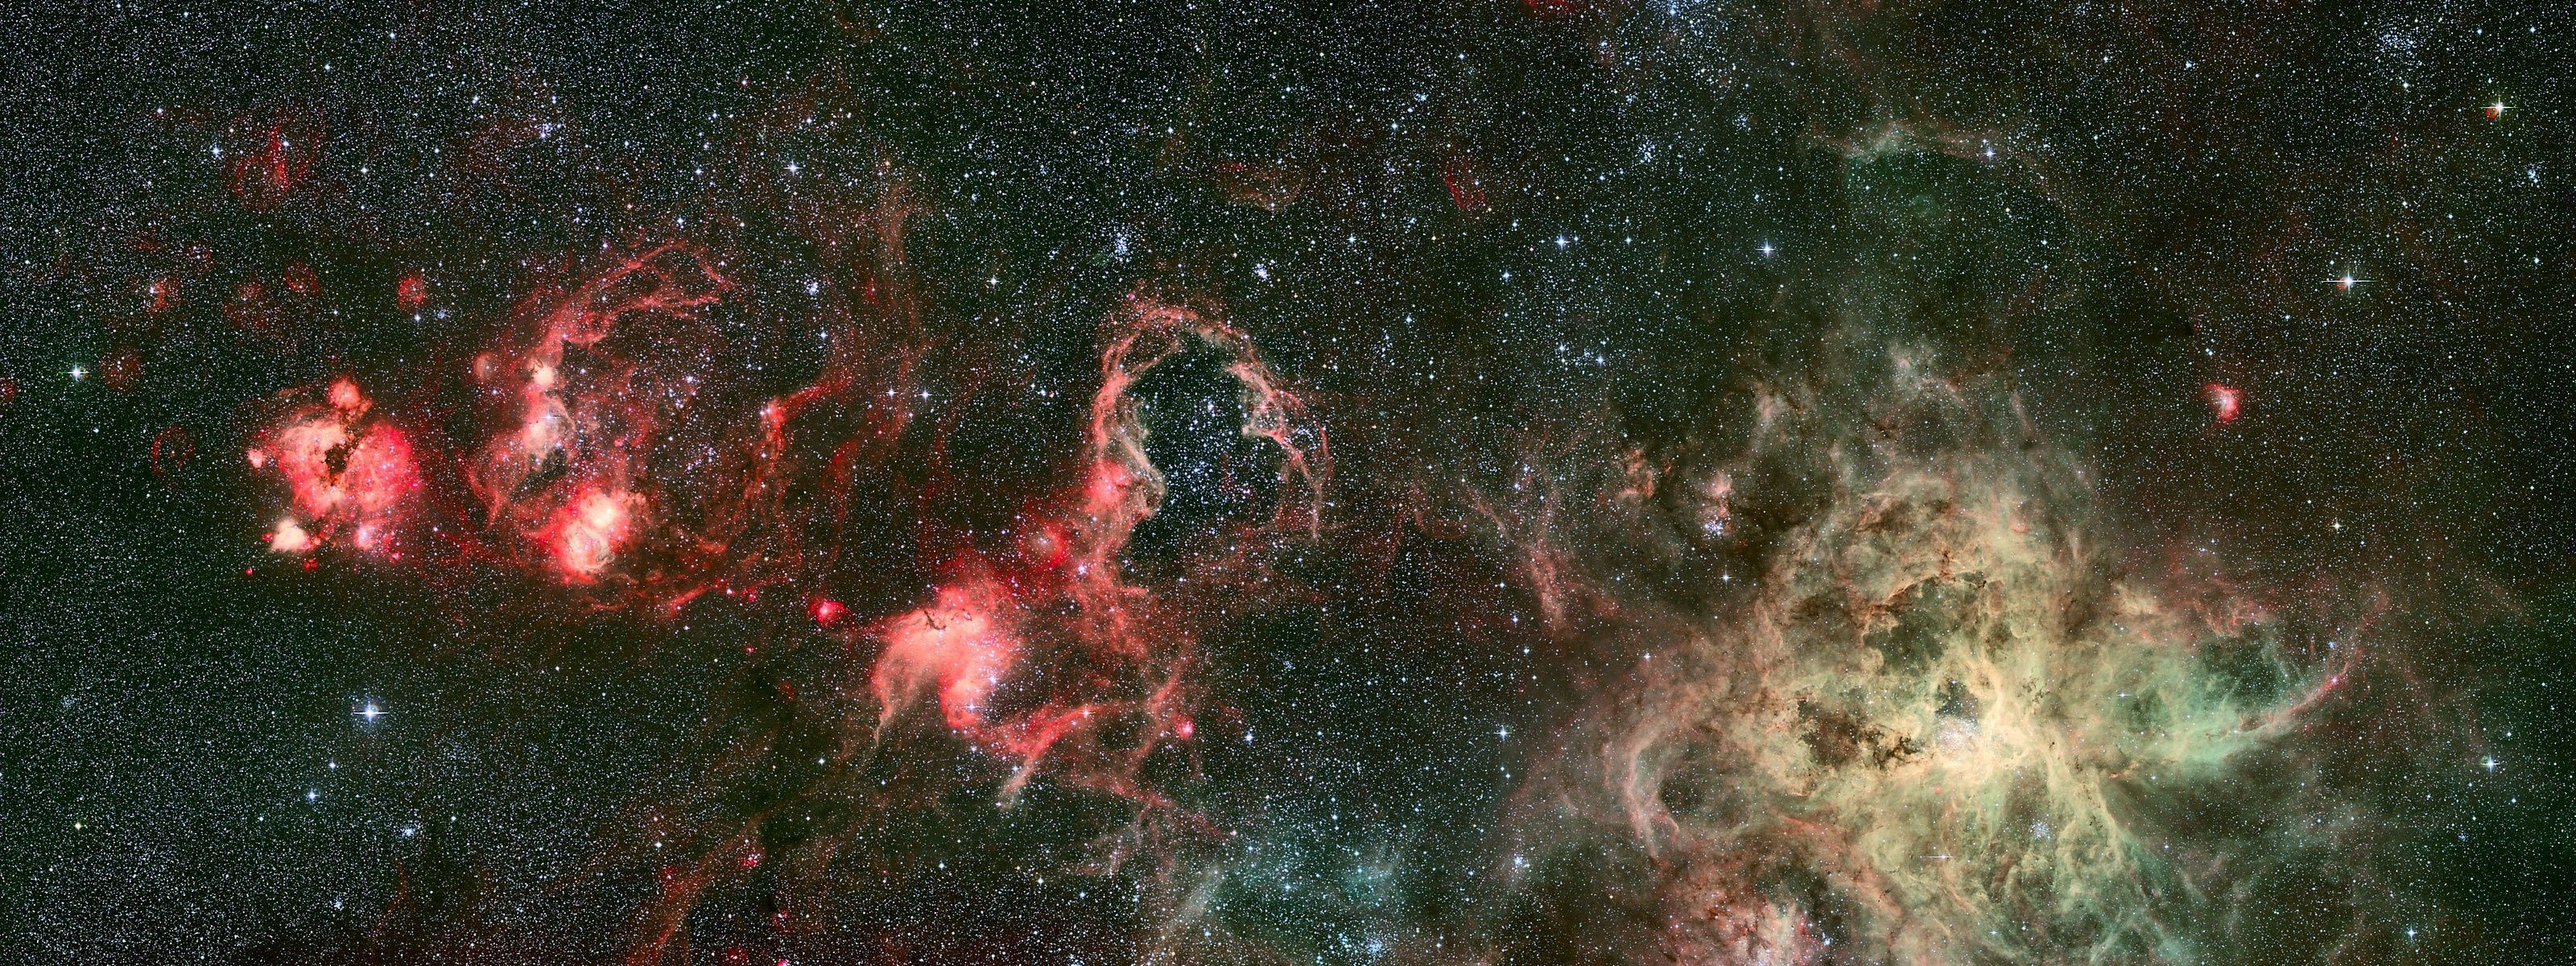 Wallpaper Tarantula Nebula, nebula, space, stars, 30 Doradus, NGC 2070 desktop wallpaper Other GoodWP.com